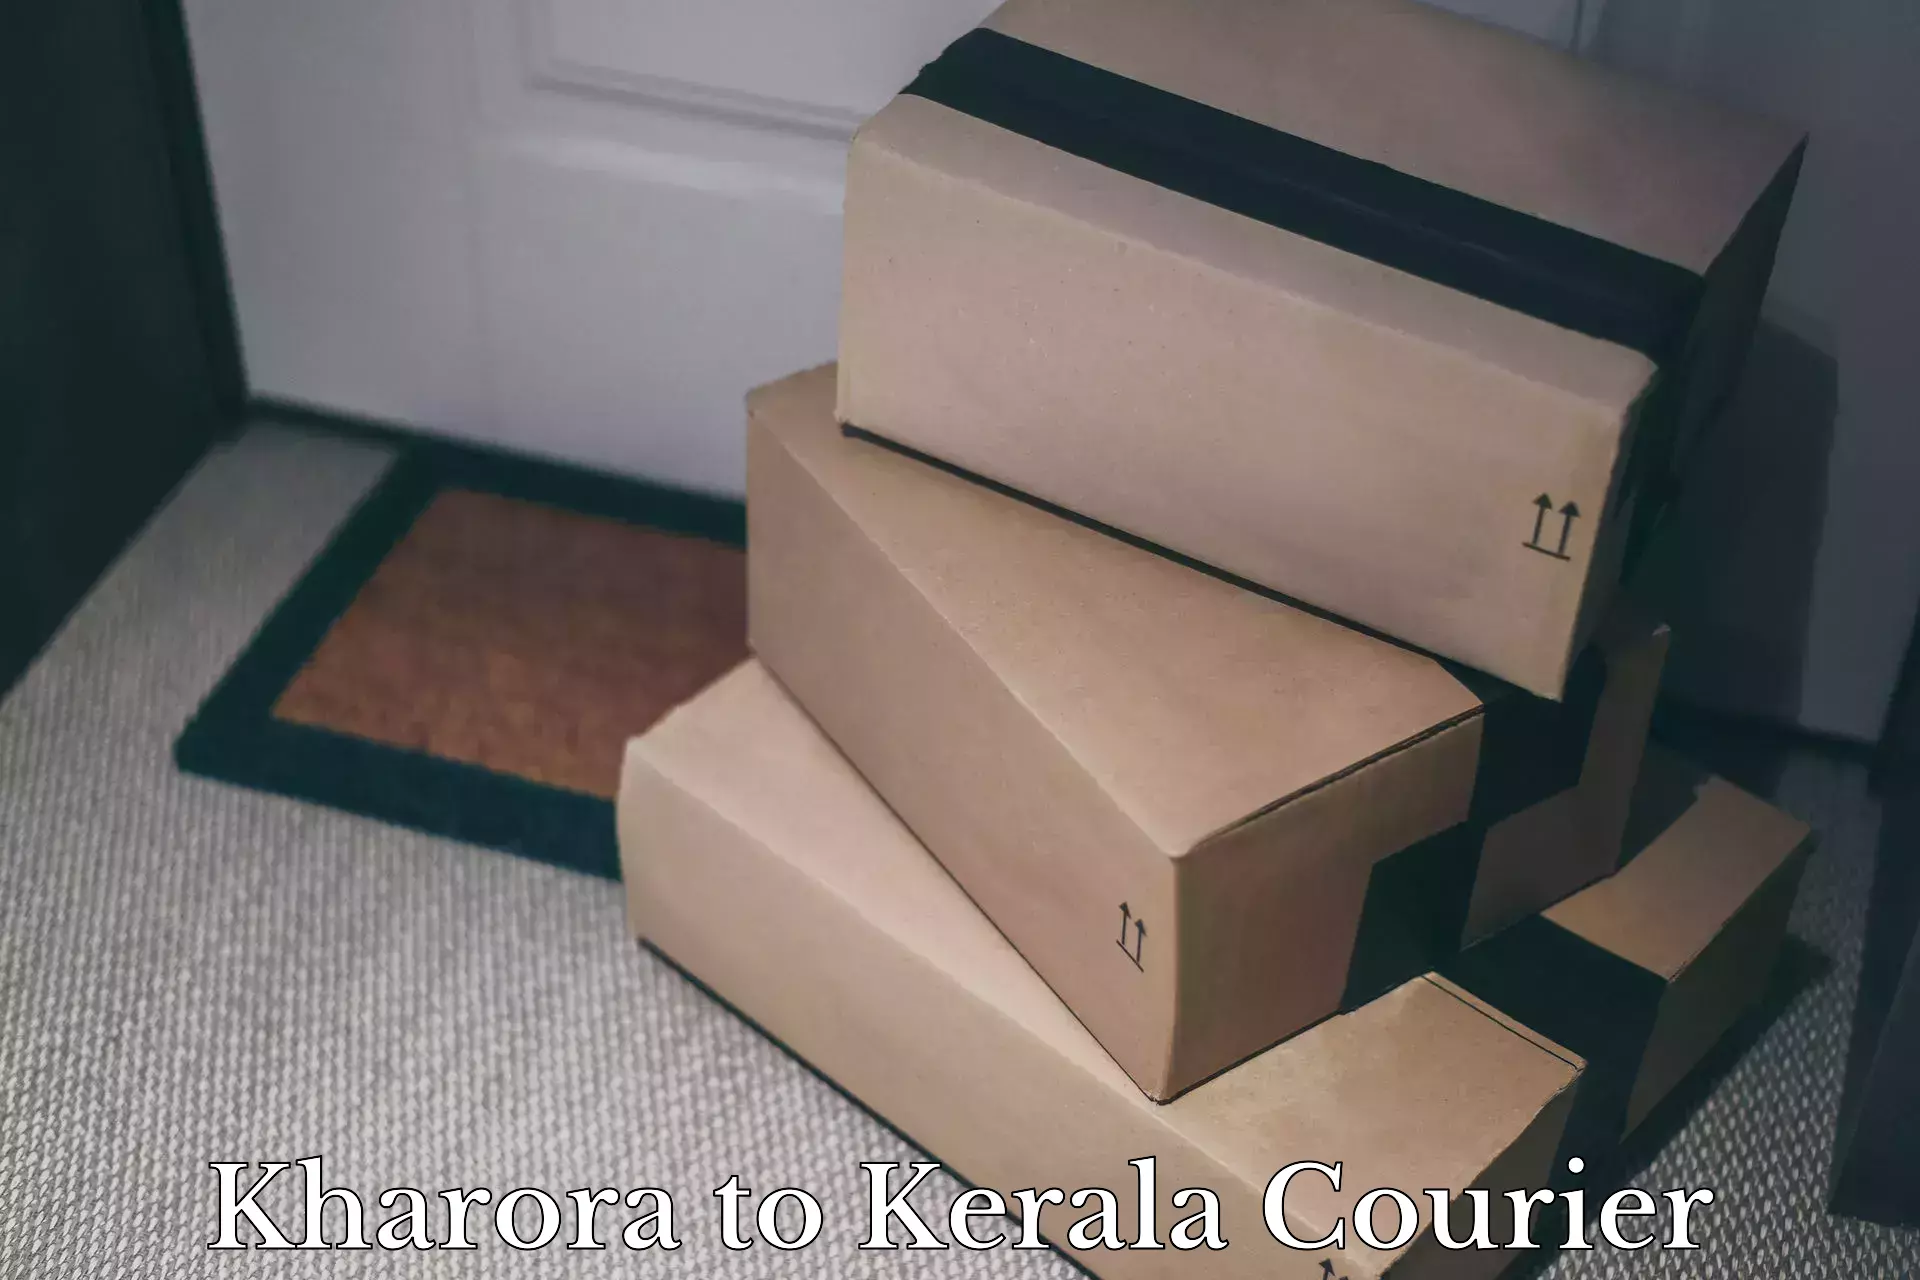 Full-service relocation in Kharora to Kerala